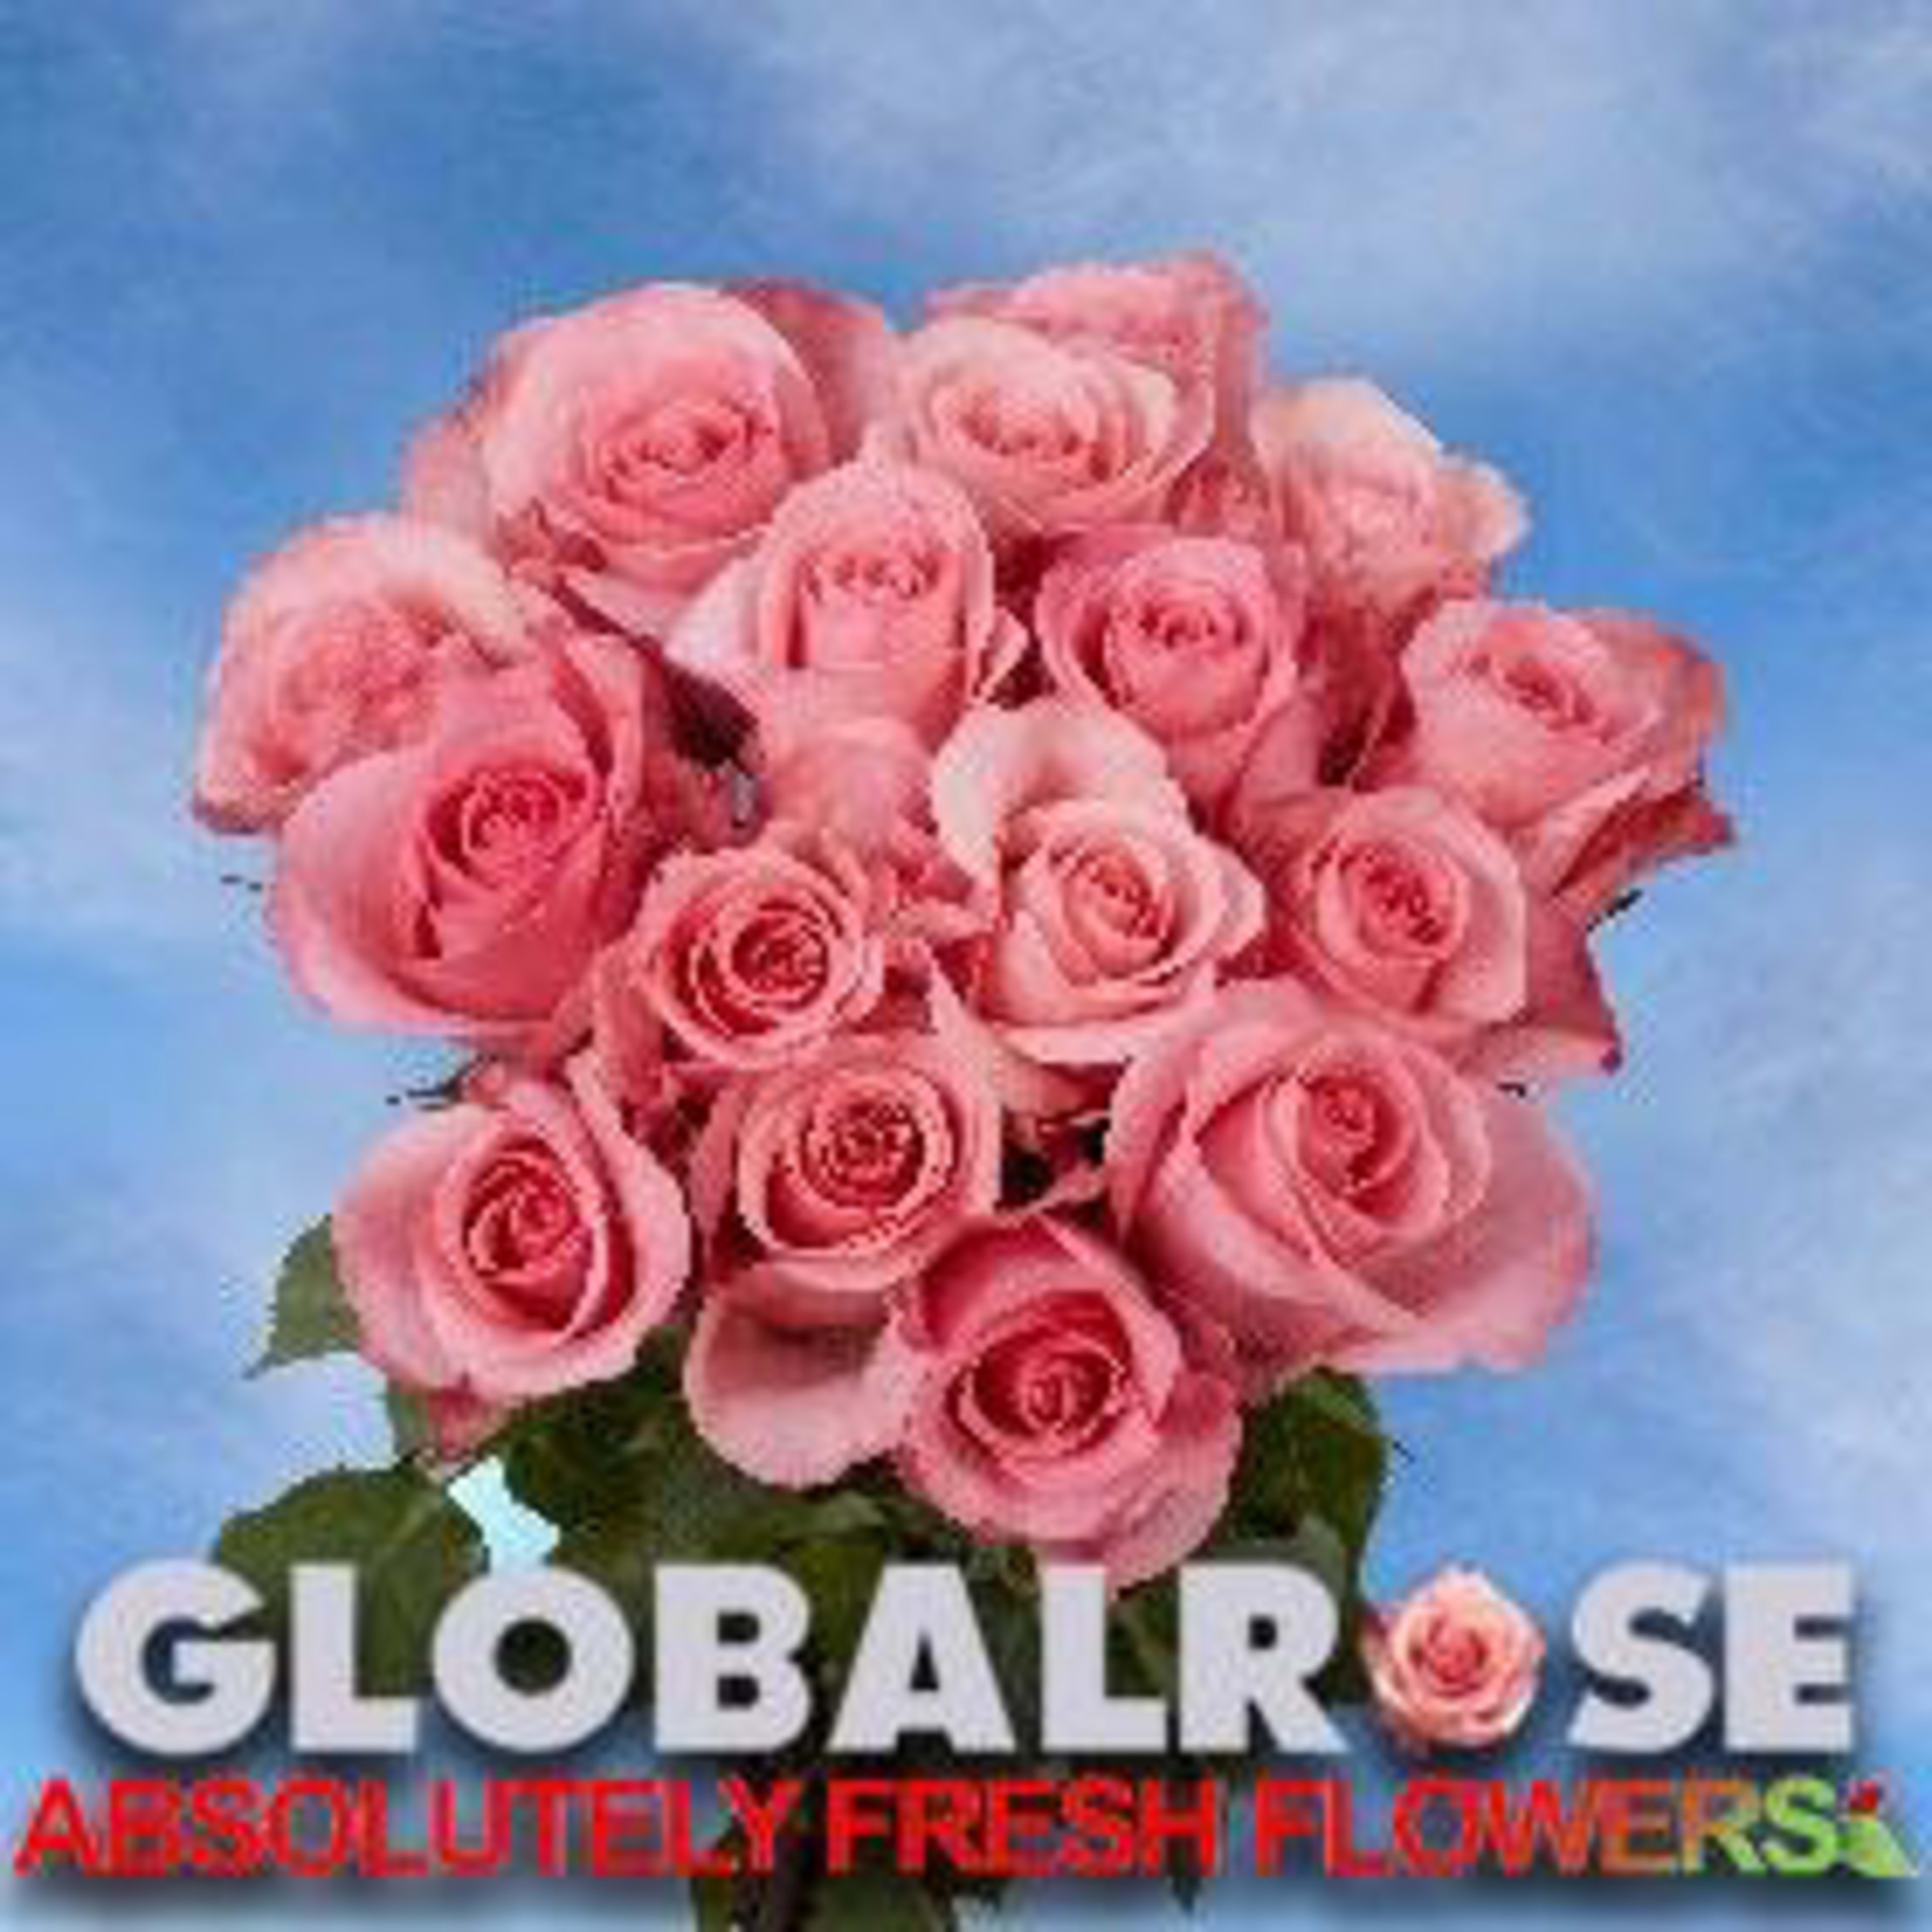 Globalrose